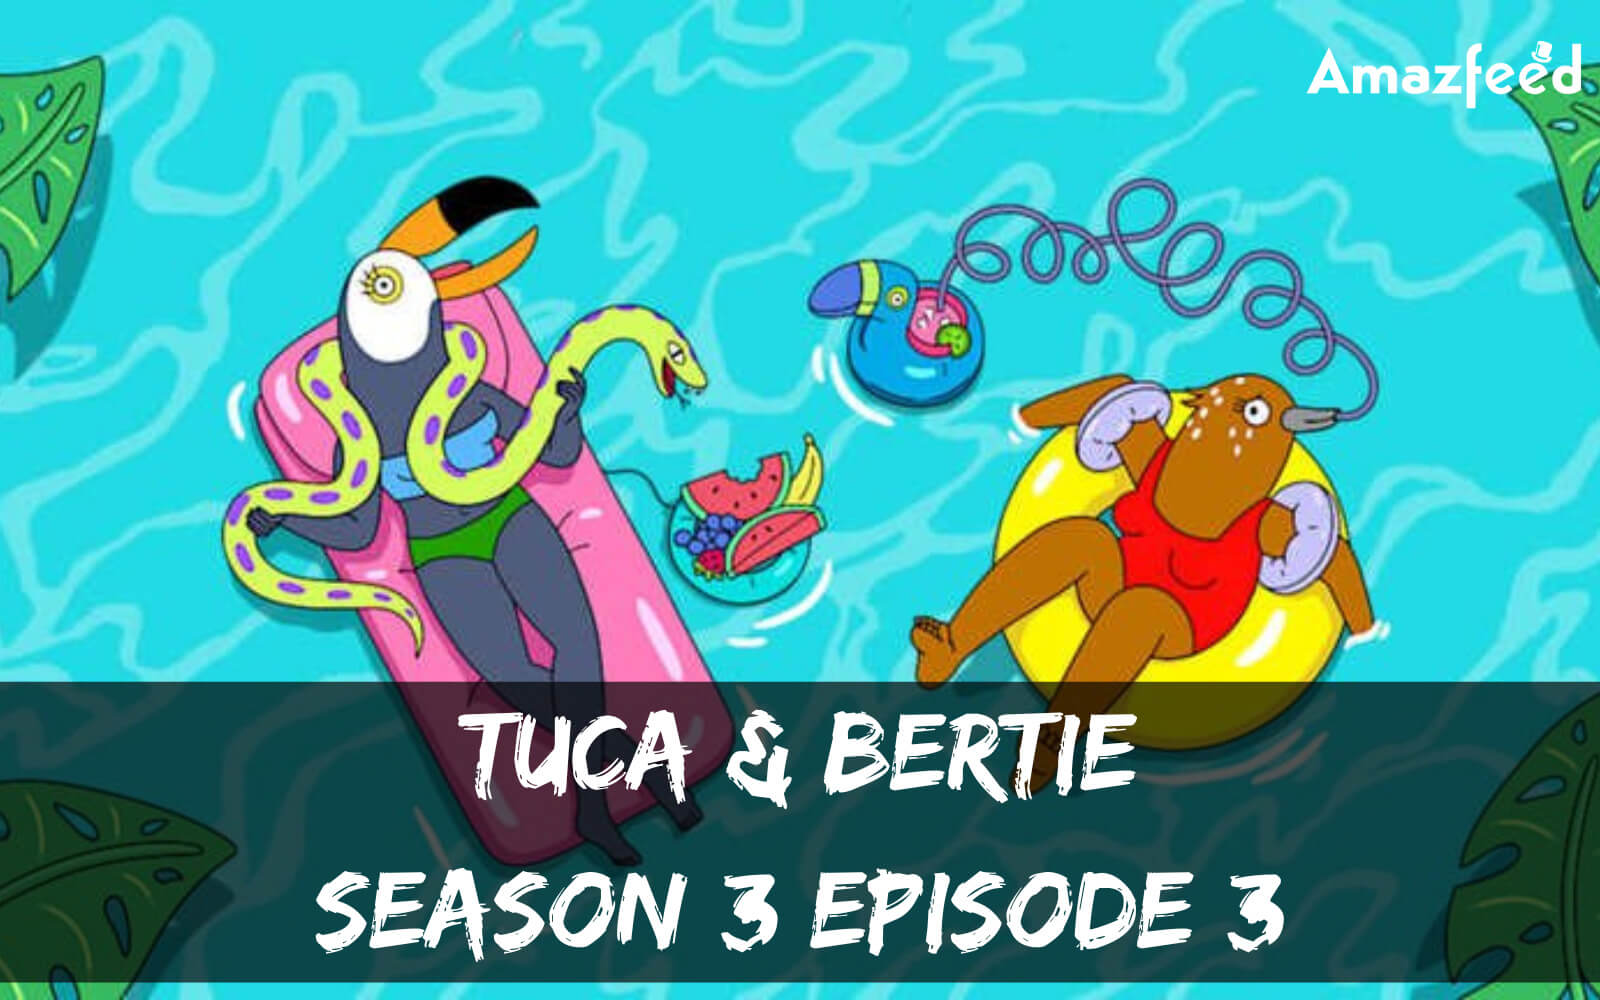 Tuca & Bertie Season 3 episode 3 release date